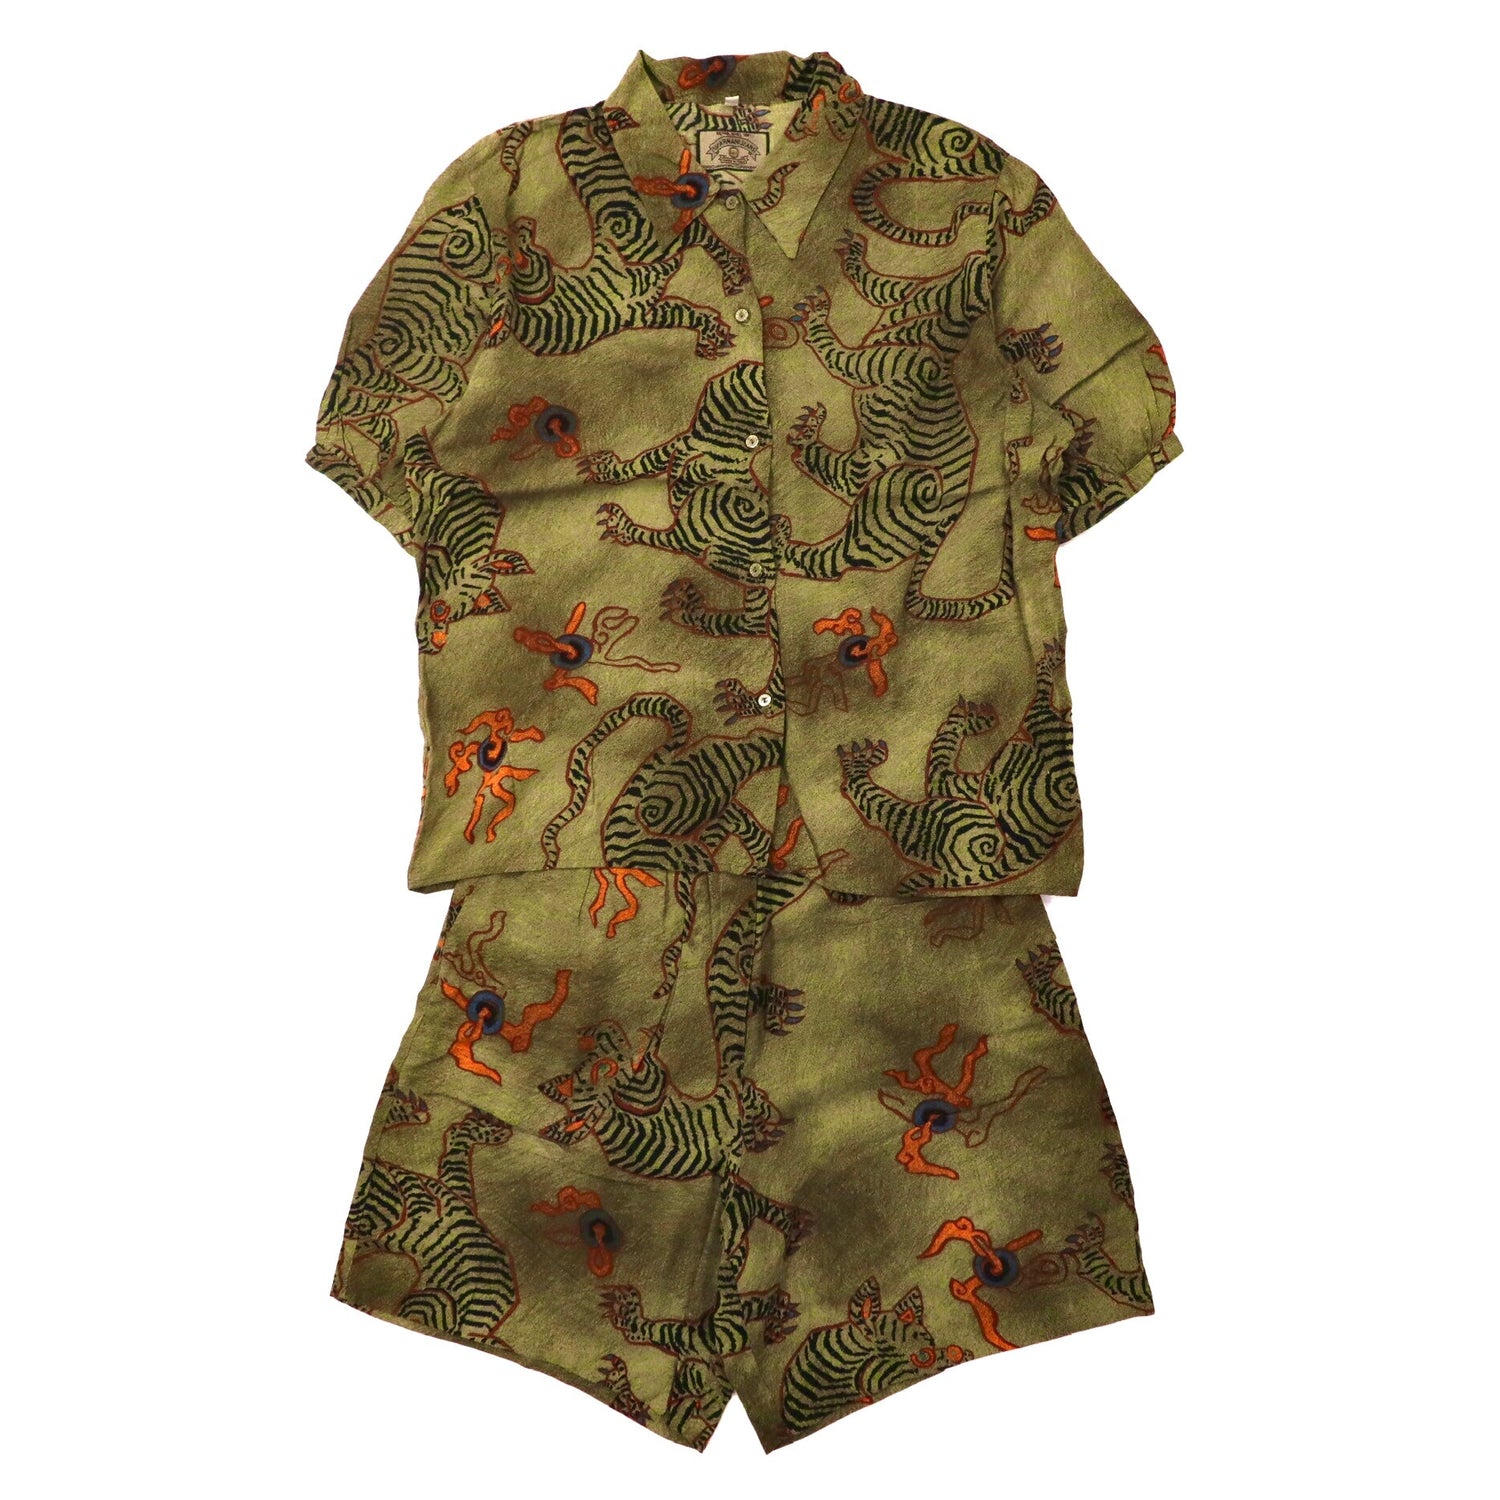 ARMANI JEANS Short Sleeve Shirt Setup S Brown Rayon Patterned ...